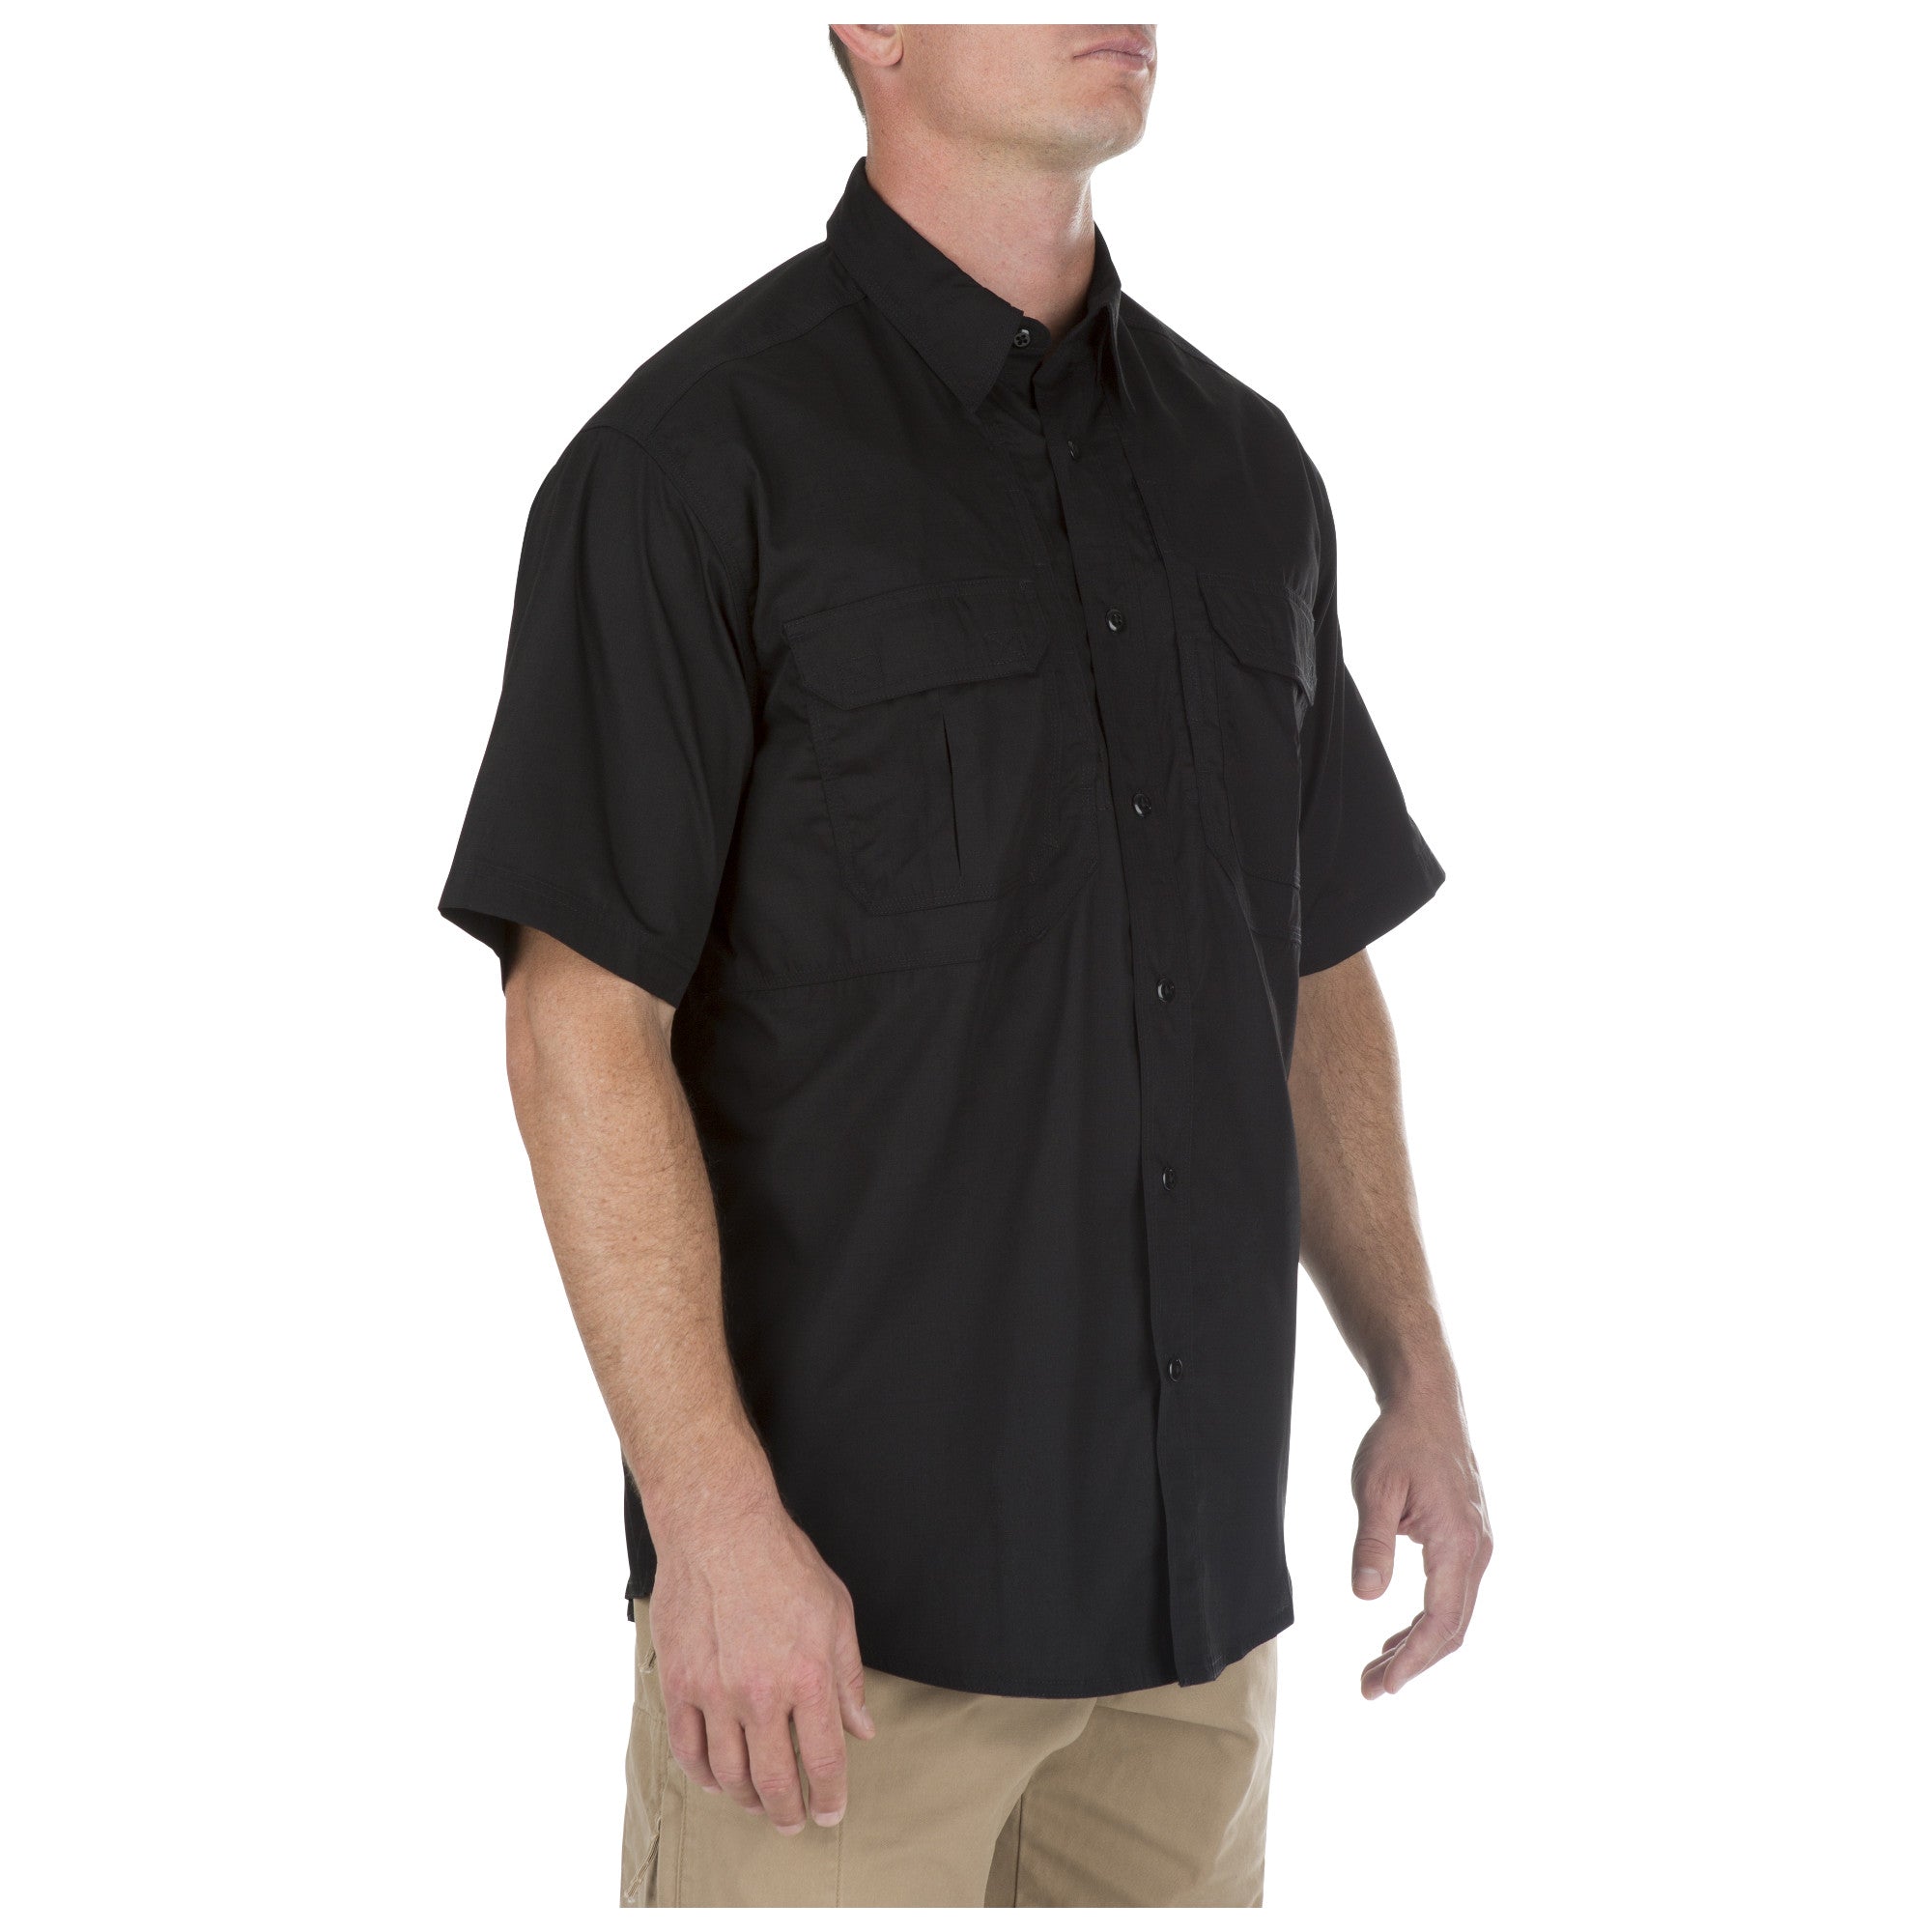 5.11 Tactical Taclite Pro Short Sleeve Shirt Shirts 5.11 Tactical Tactical Gear Supplier Tactical Distributors Australia